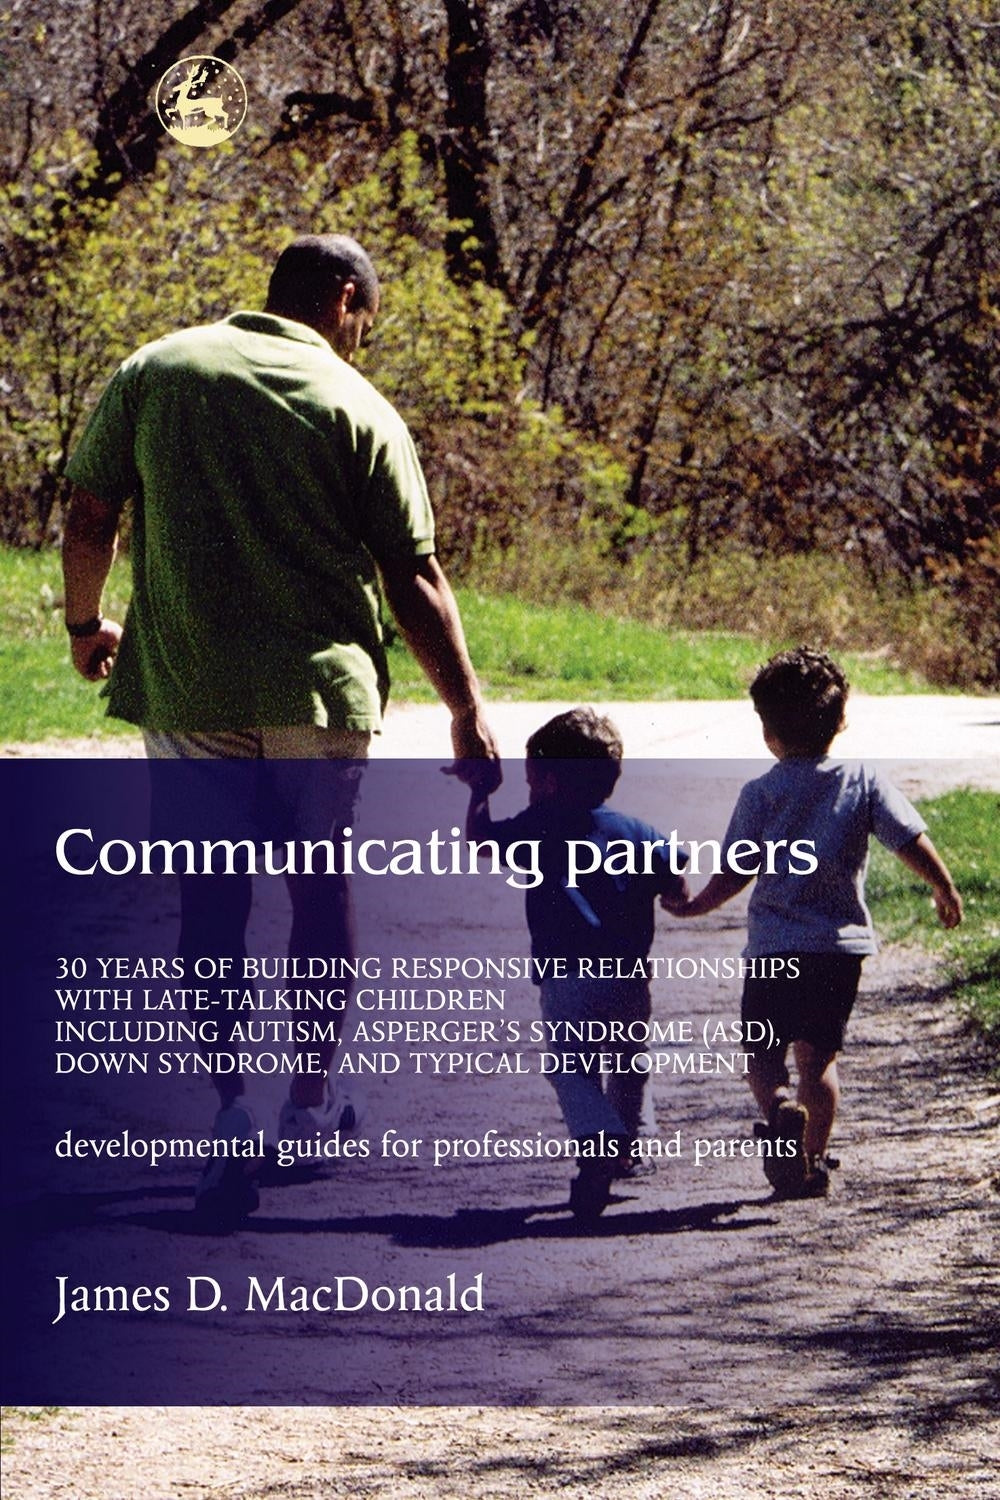 Communicating Partners by James D. MacDonald